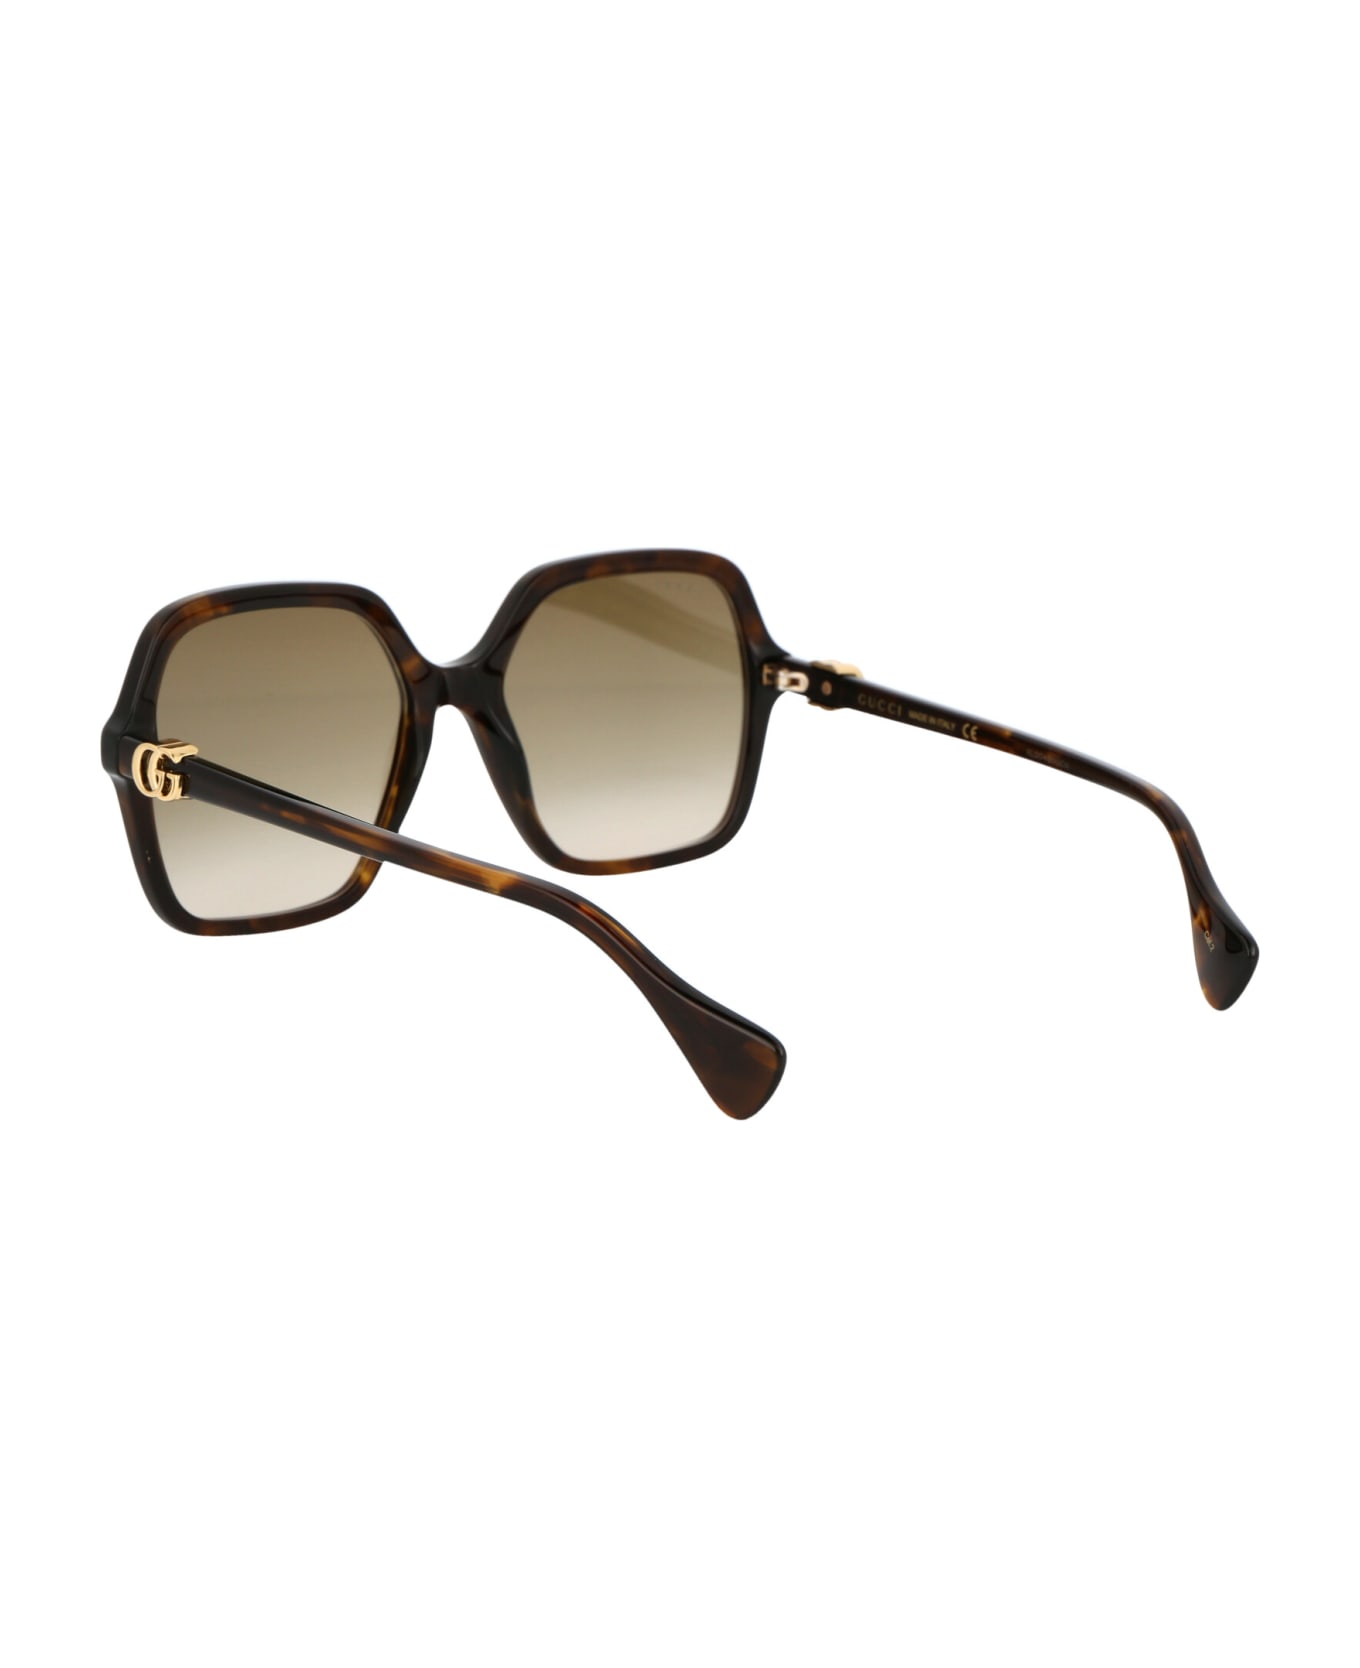 Gucci Eyewear Gg1072s Sunglasses - 002 HAVANA HAVANA BROWN サングラス